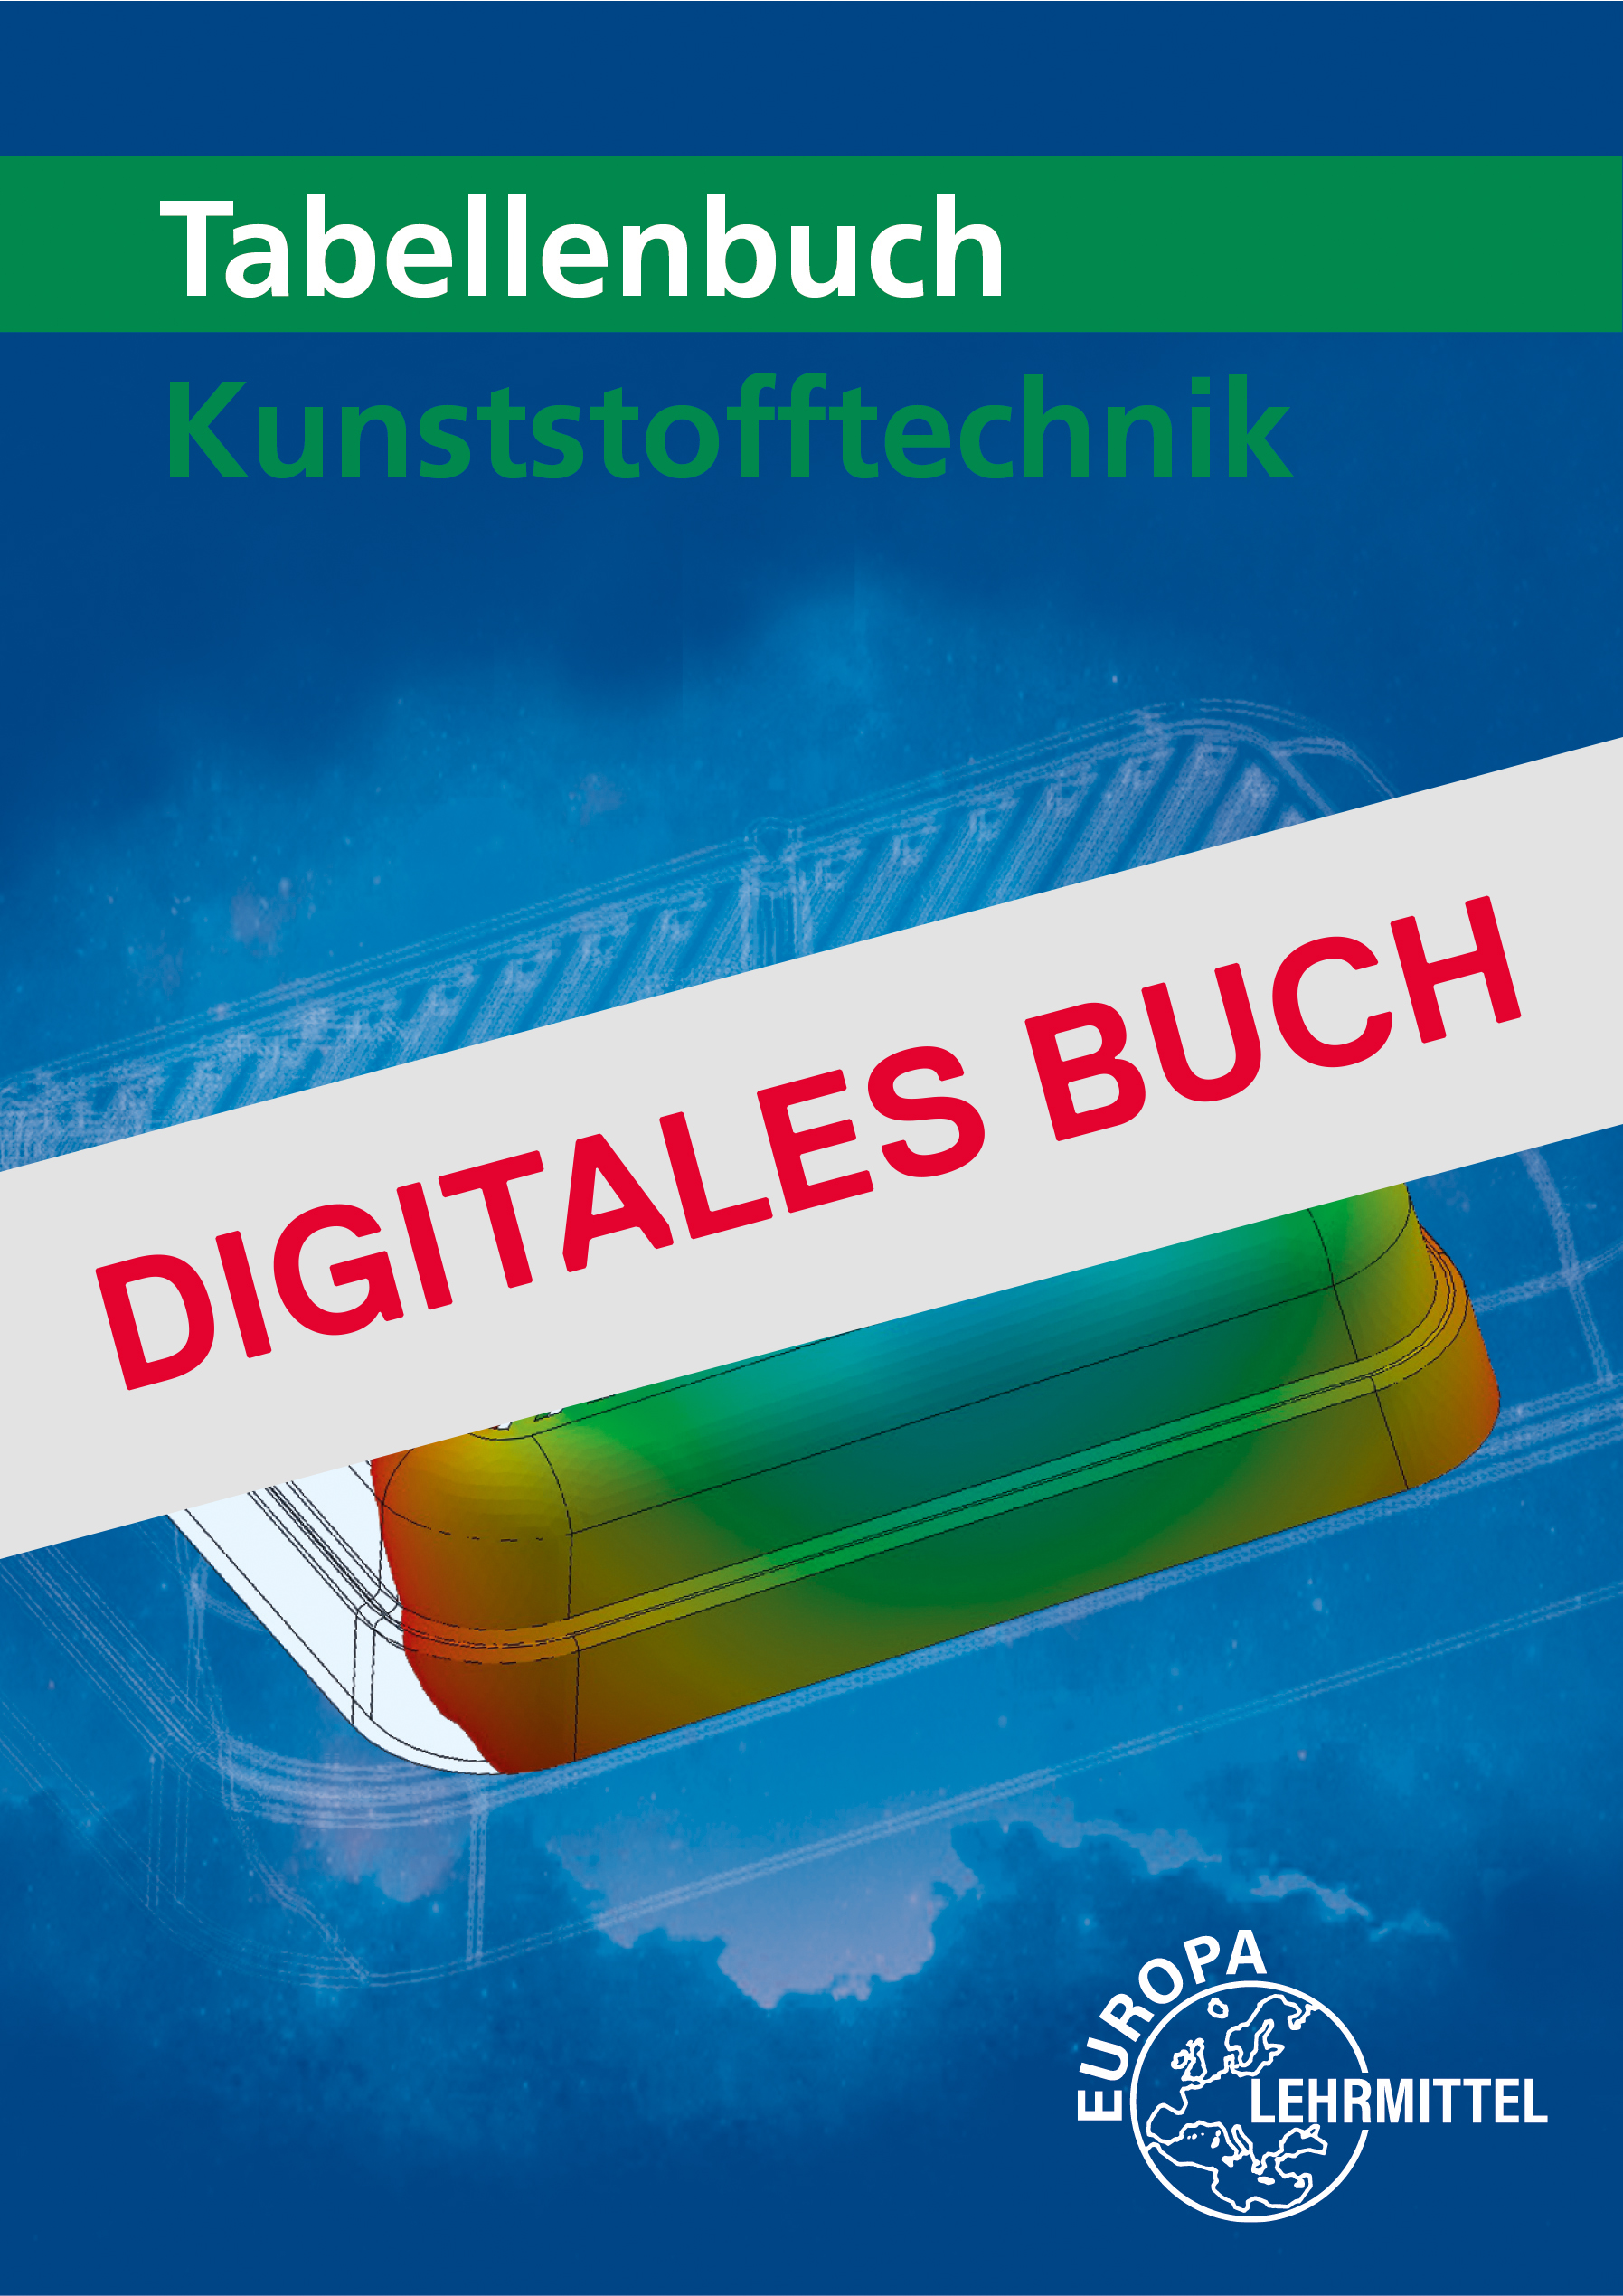 Tabellenbuch Kunststofftechnik - Digitales Buch